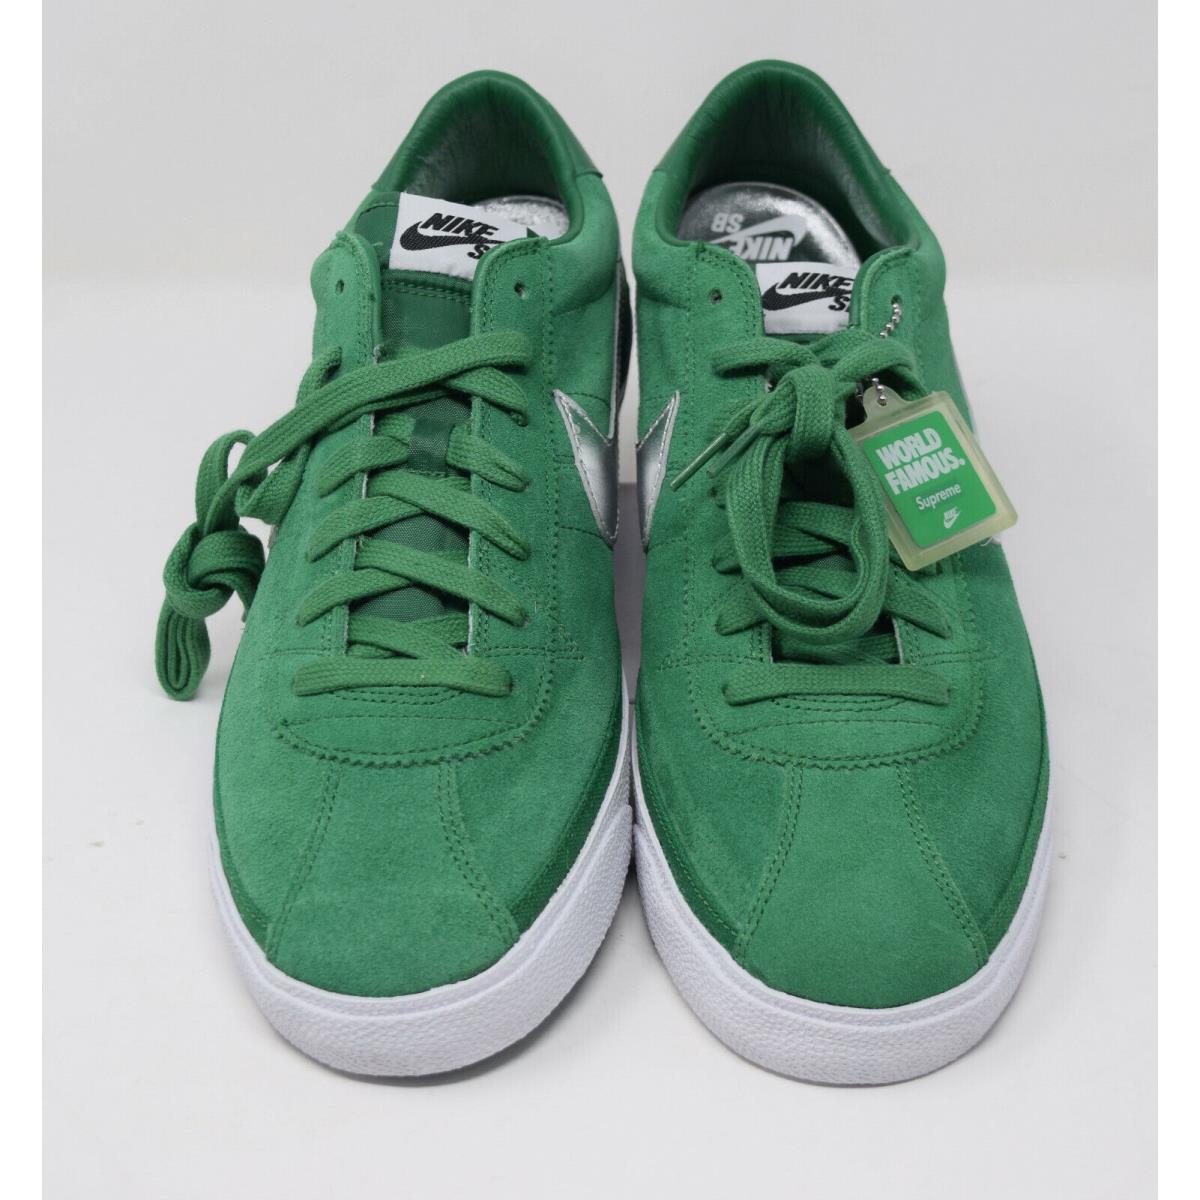 Nike SB Bruin Supreme Pine Green 363319-301 Mens Shoes Sneakers 13 US